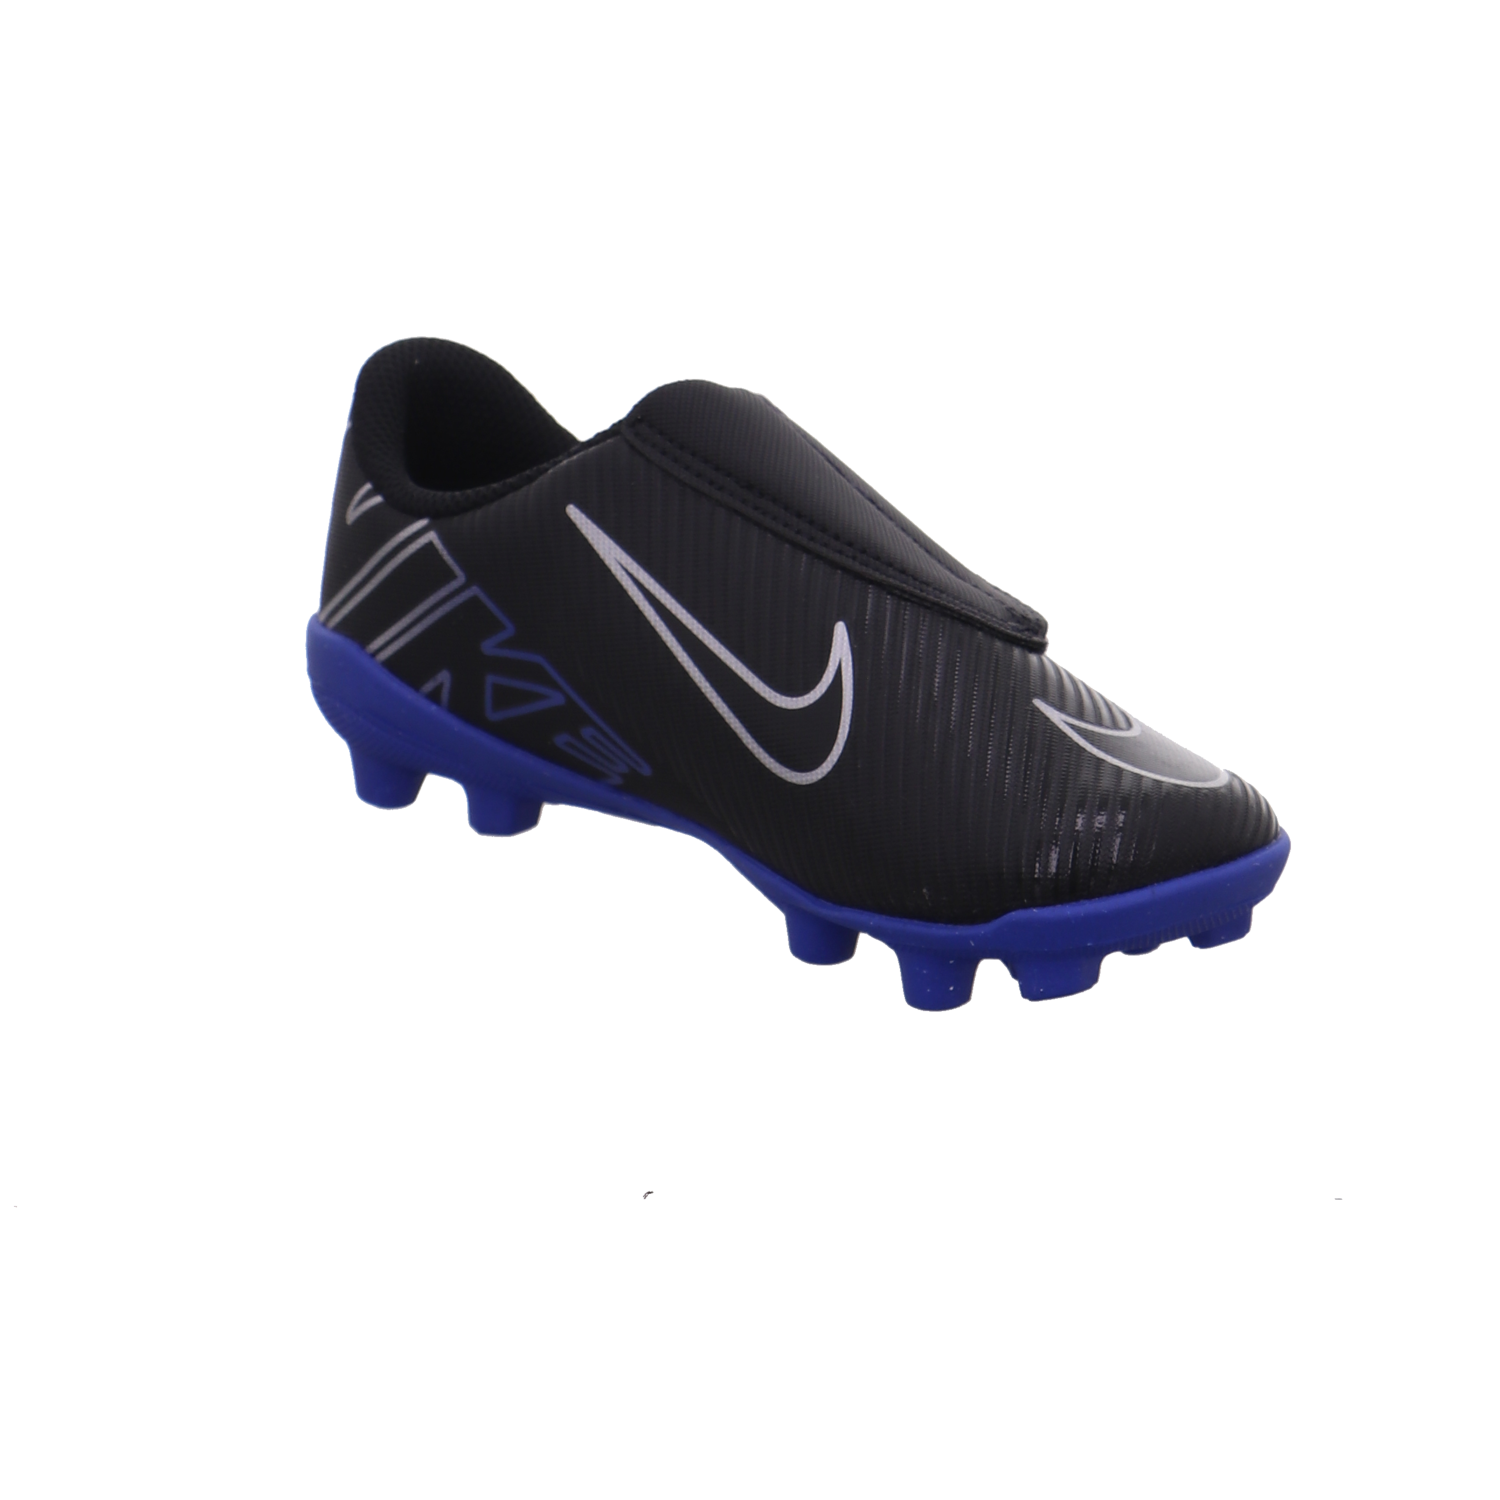 Nike Fußballschuhe schwarz kombi Bild7